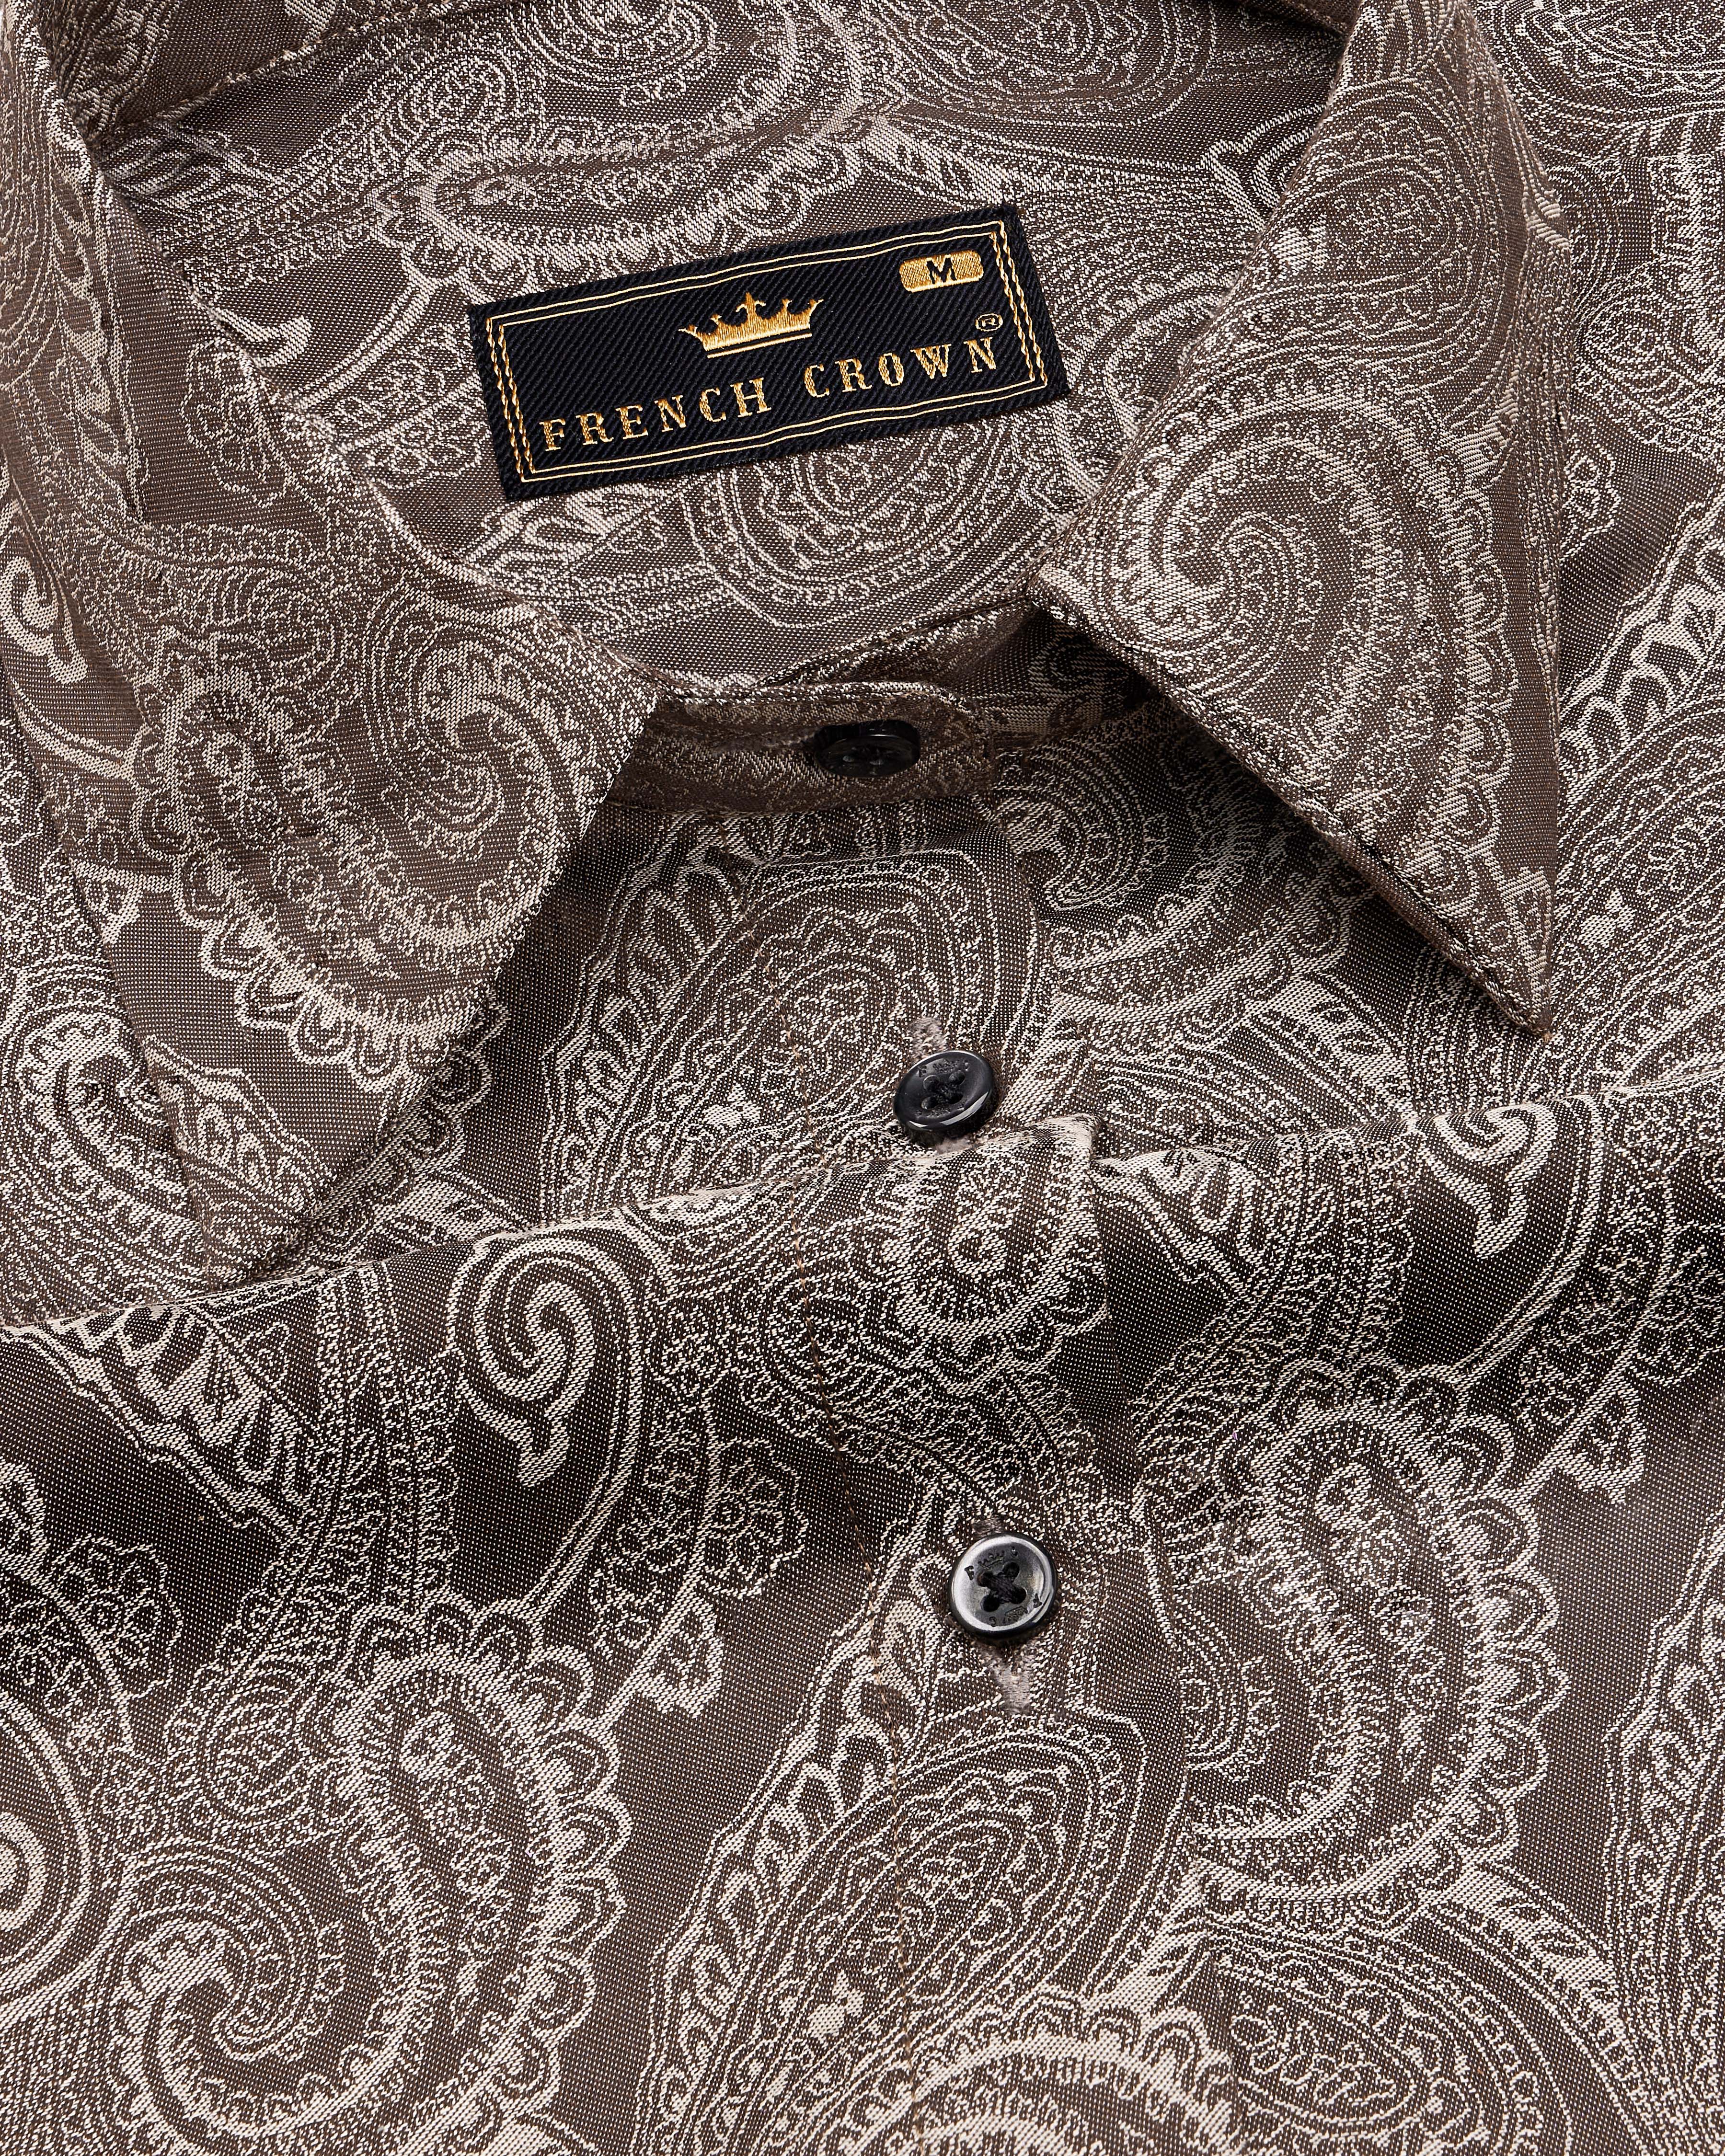 Wenge Brown with Turkey Cream Paisley Printed Premium Cotton Shirt WS001-BLK-32, WS001-BLK-34, WS001-BLK-36, WS001-BLK-38, WS001-BLK-40, WS001-BLK-42